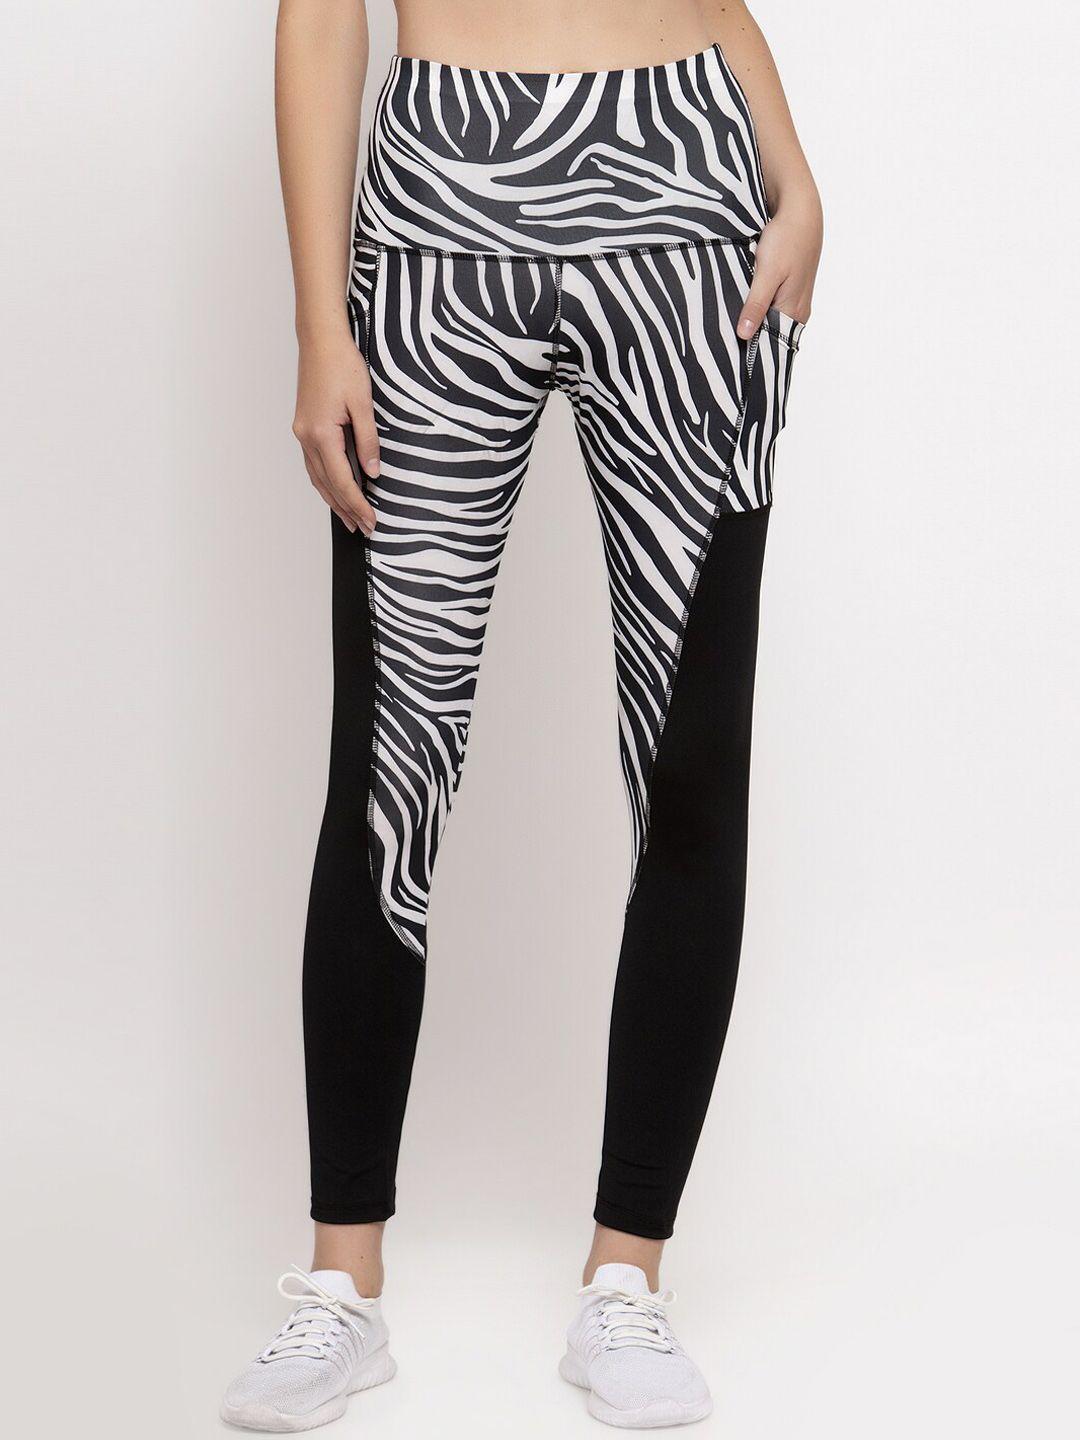 cukoo women black & white zebra printed training track pants